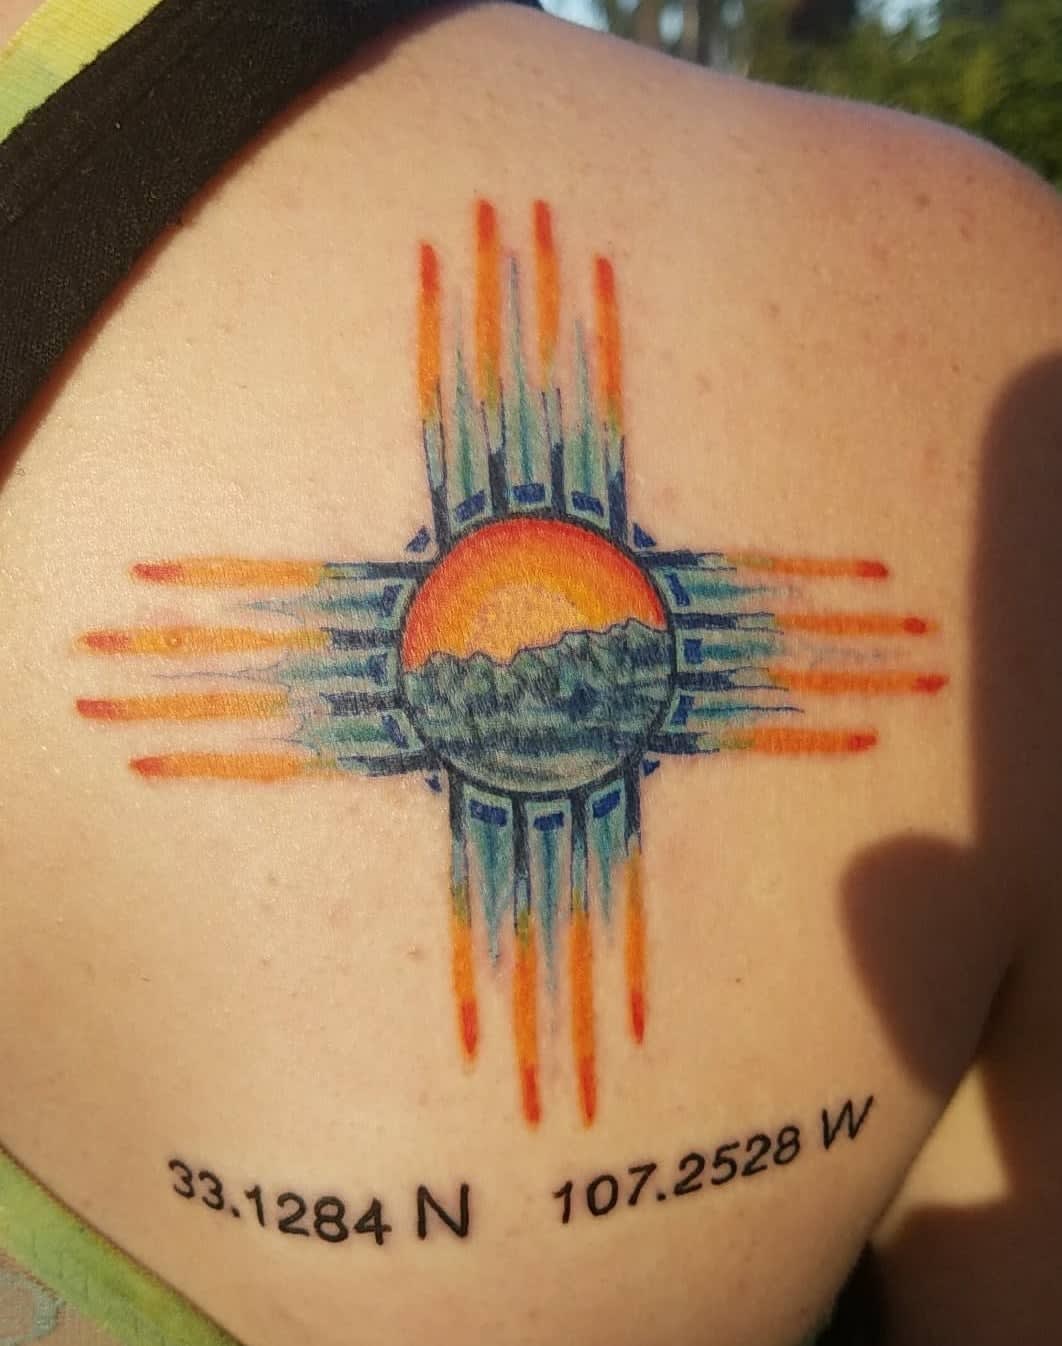 New Mexico Tattoo done in 2018 by Marco Gomez of the Black Umbrella Tattoo Garden Grove CA